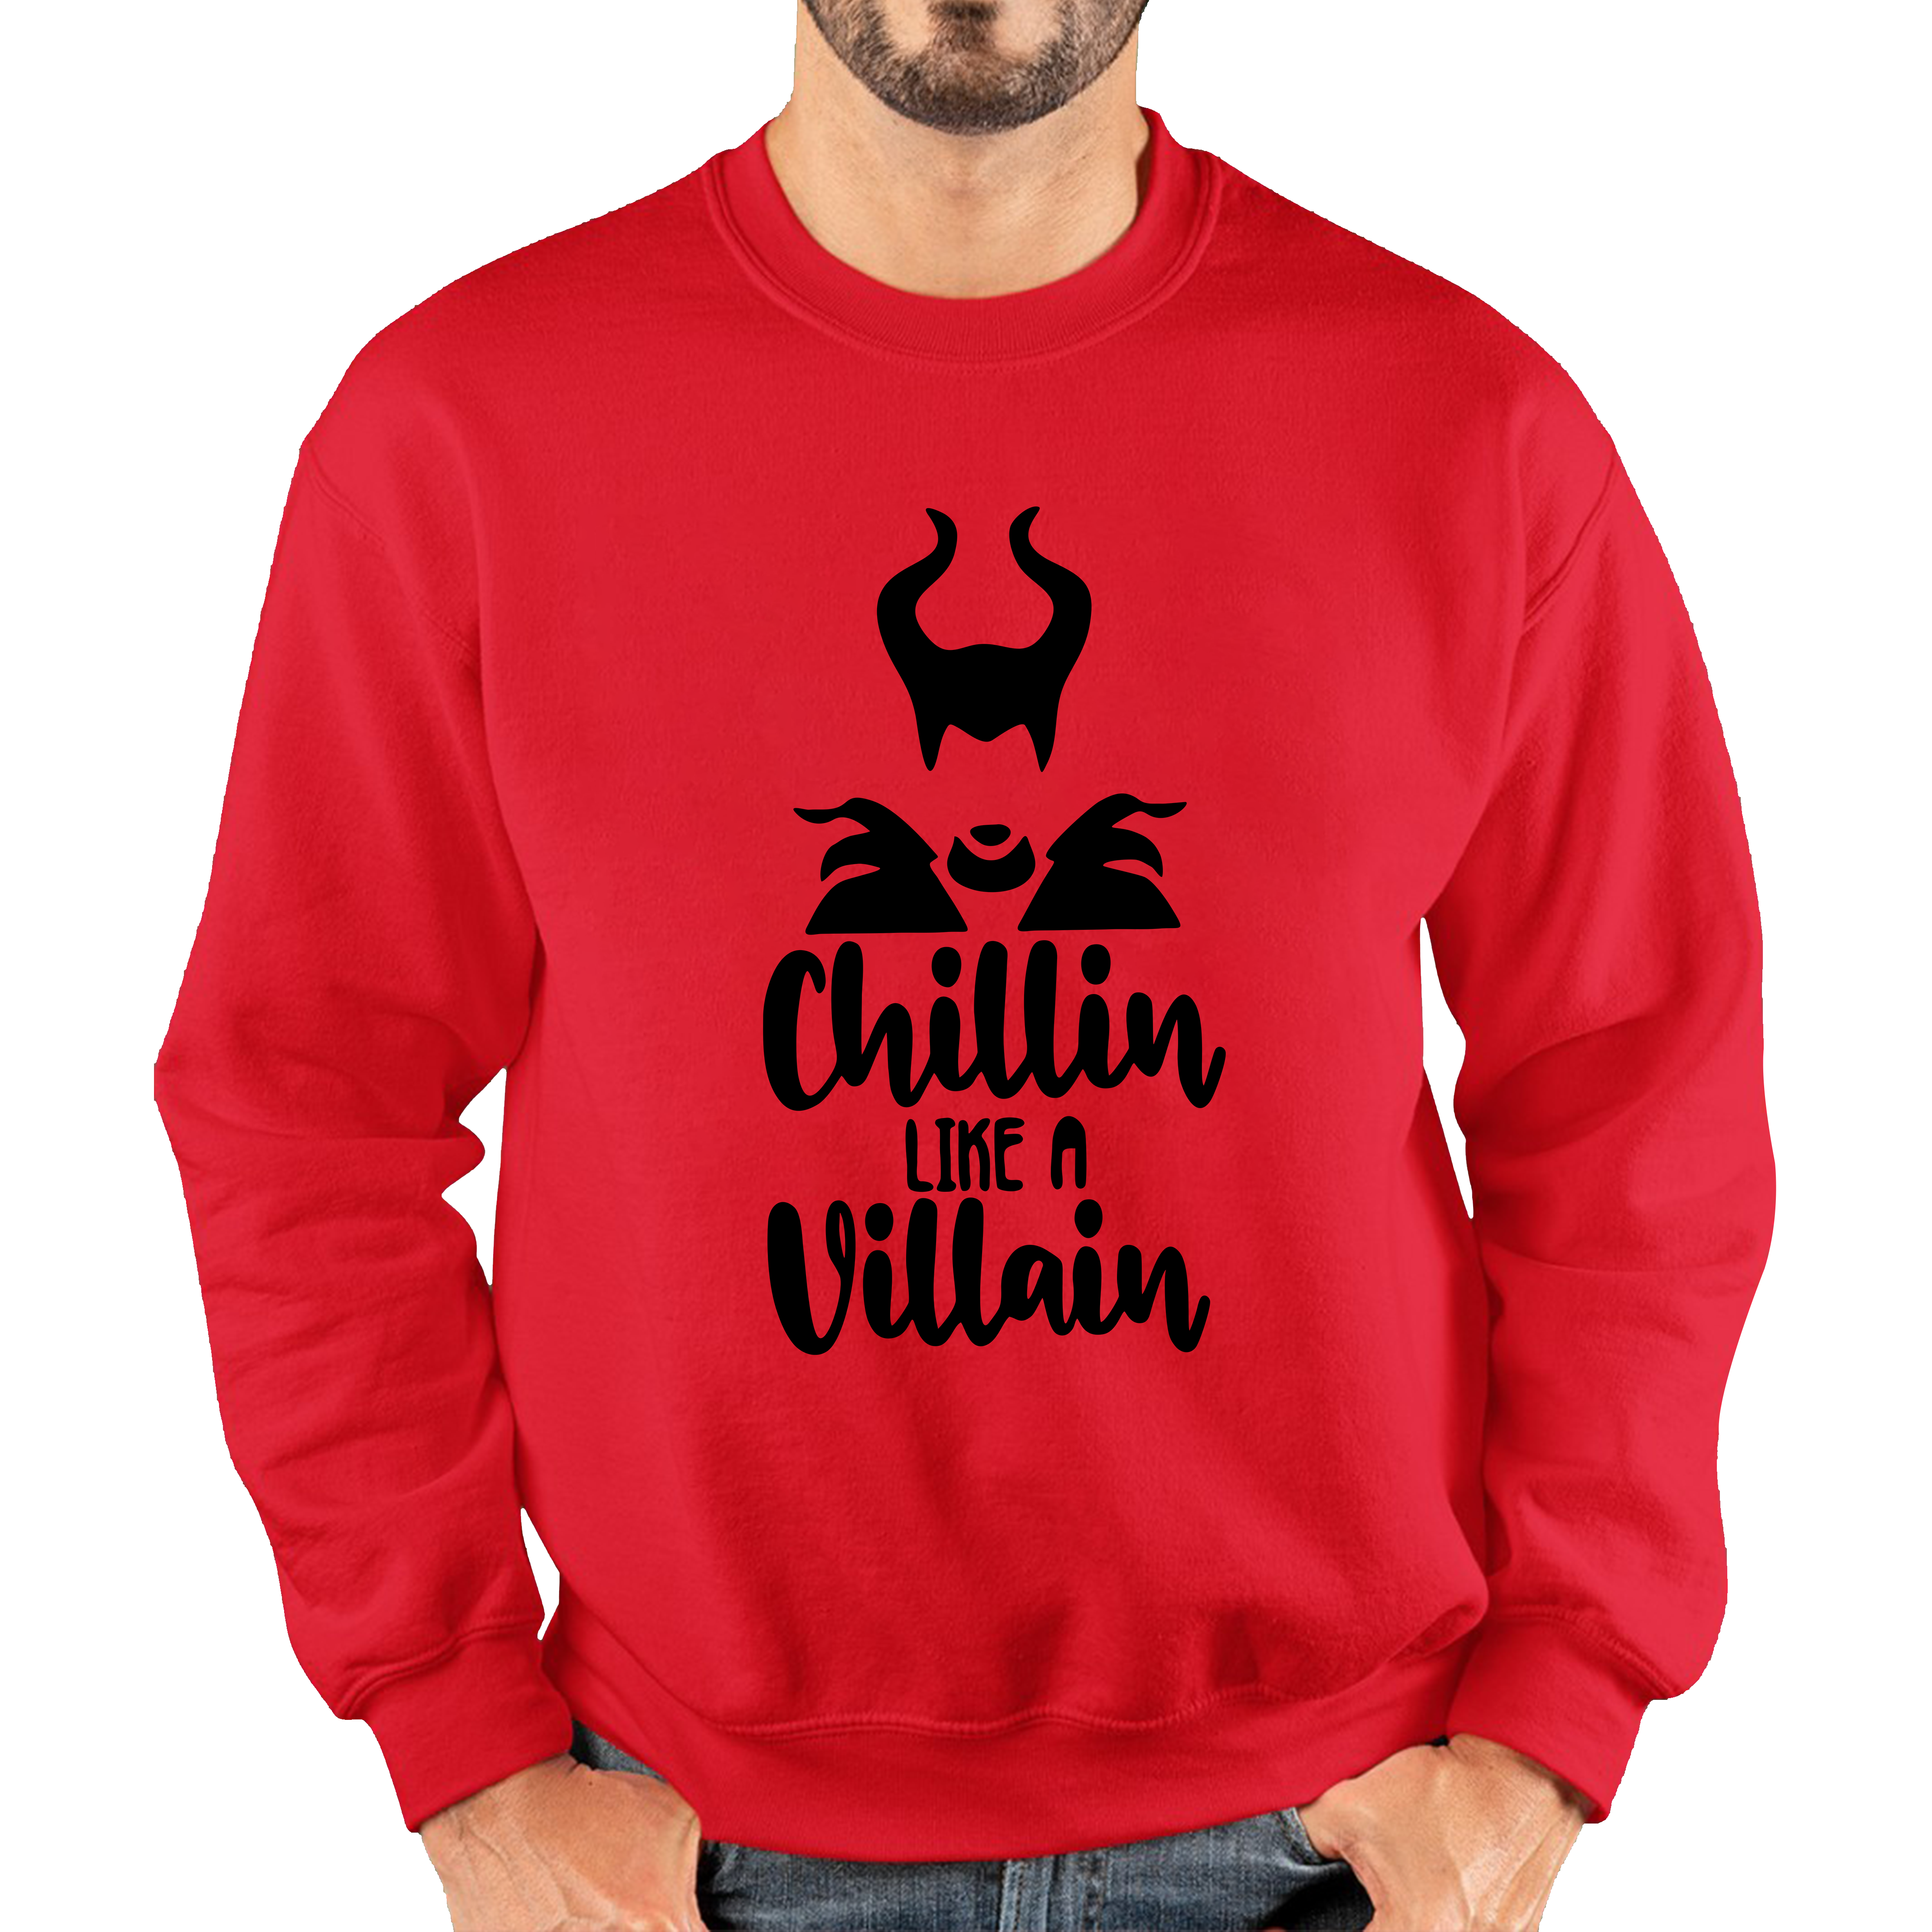 Disney Villains Chillin Like A Villain Adult Sweatshirt